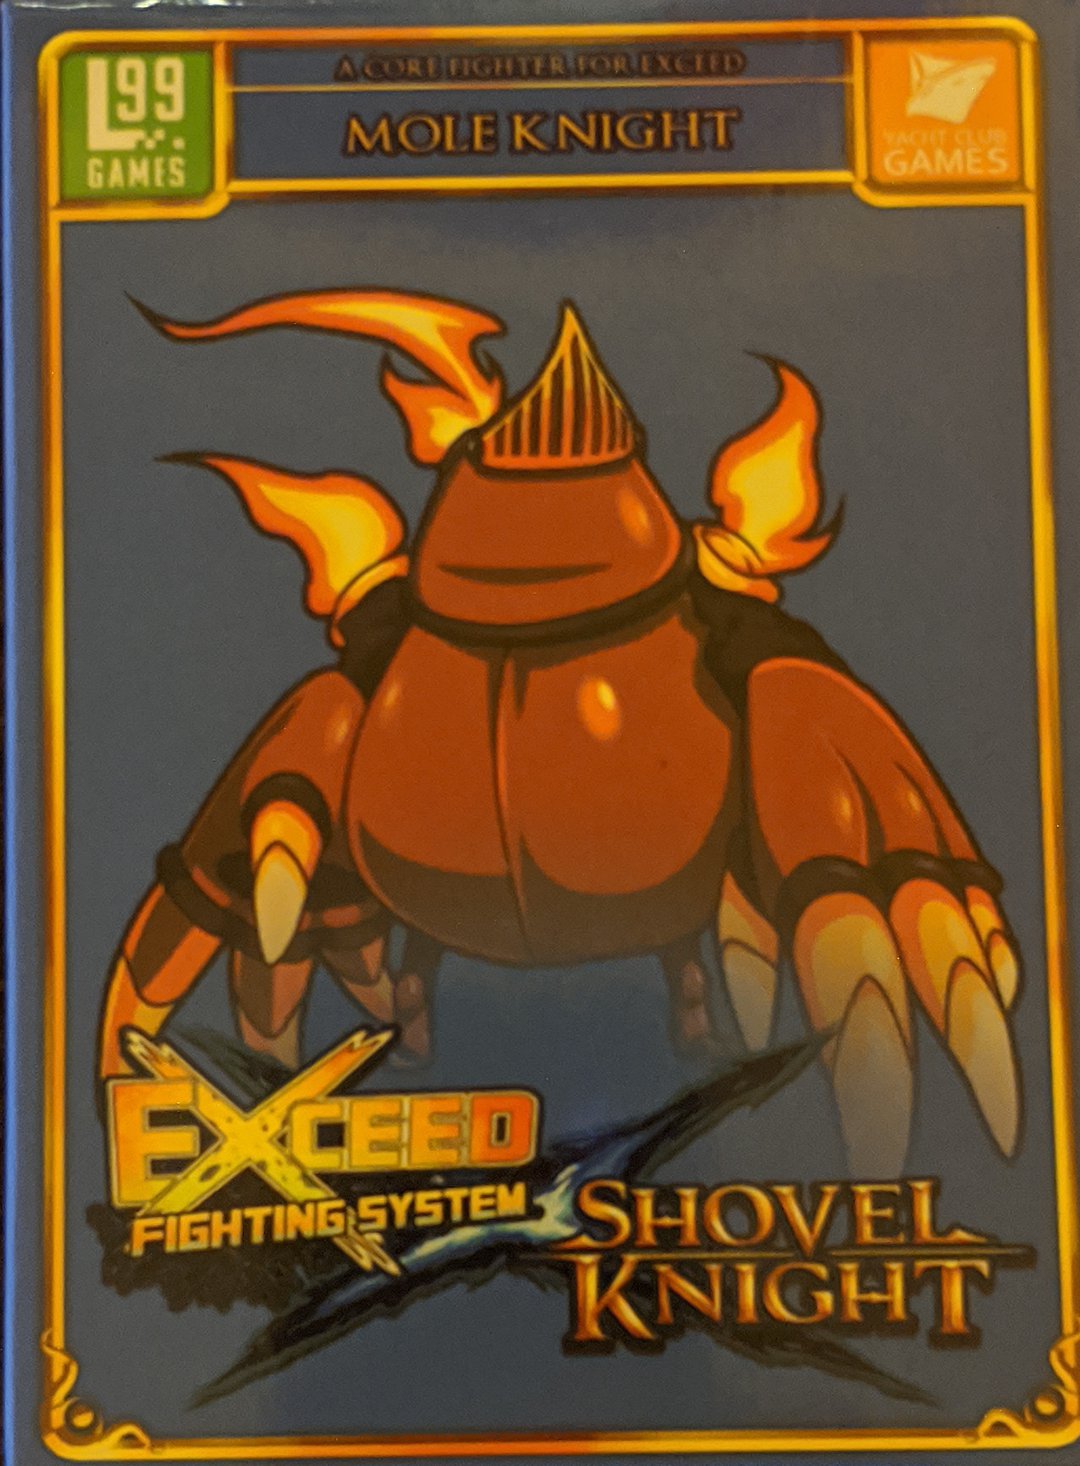 exceed shovel knight mole